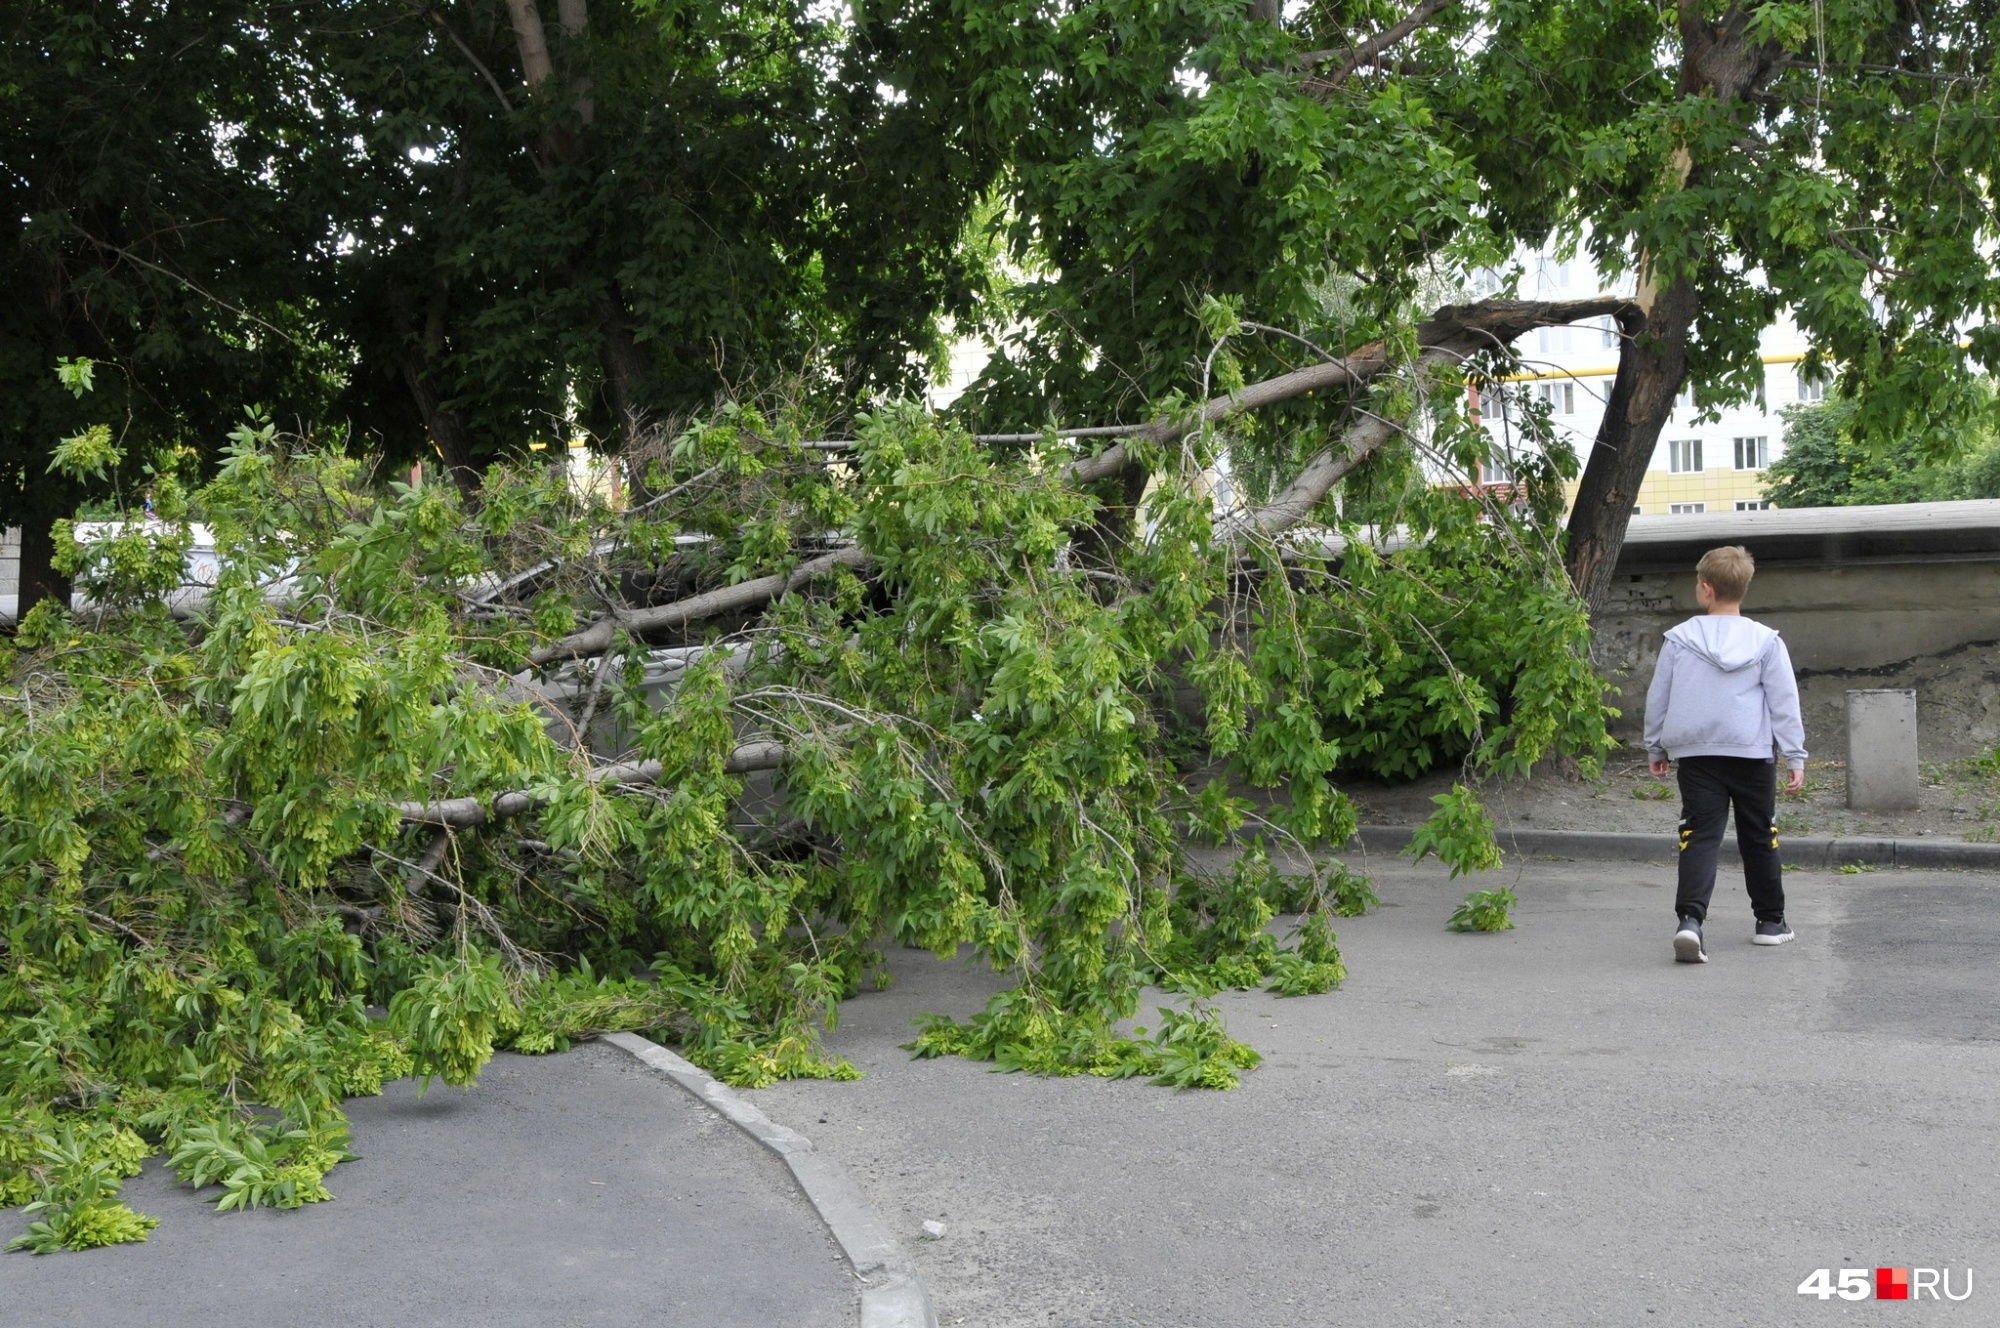 Дерево упало на авто на дороге между жилым домом и гаражами